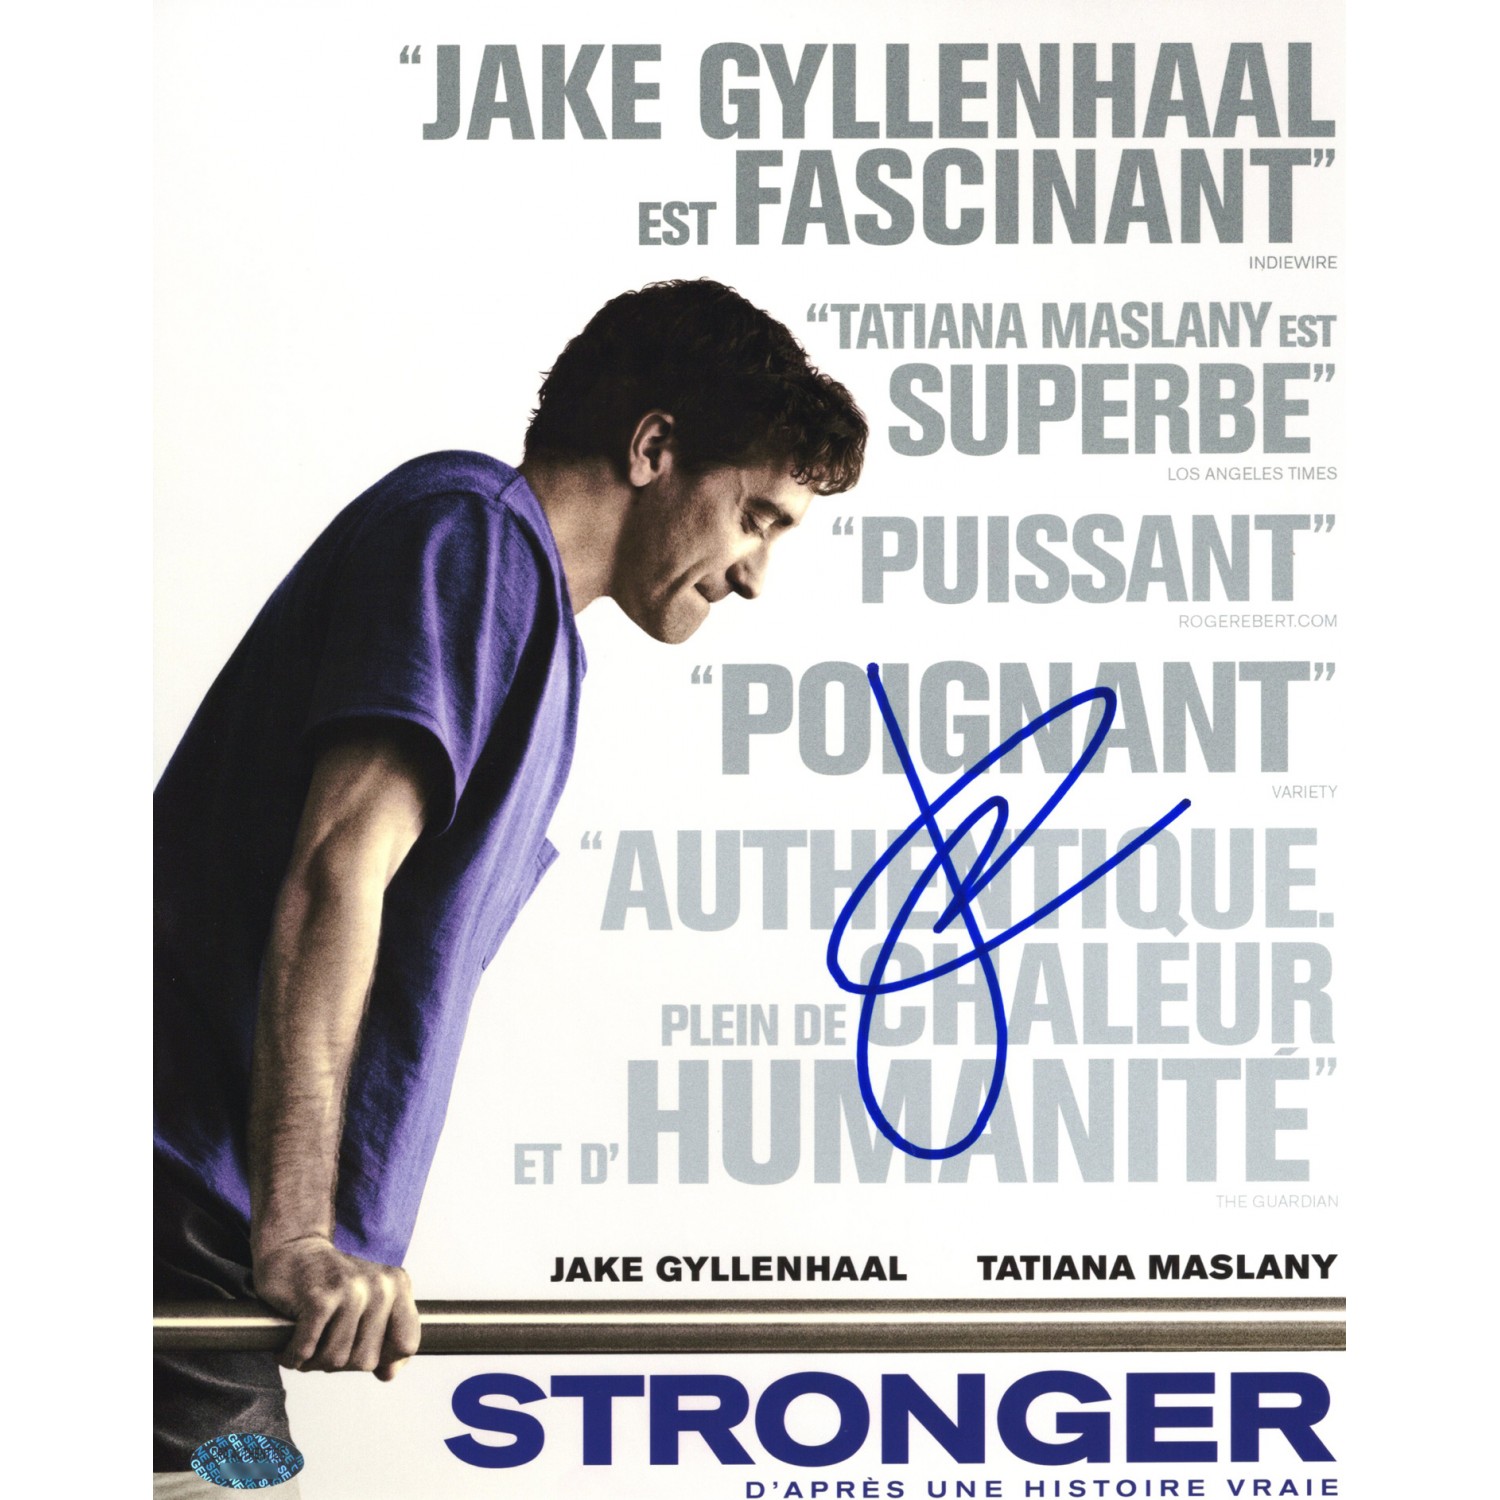 Jake Gyllenhaal ジェイク・ギレンホール 直筆サイン入り写真認証COA付